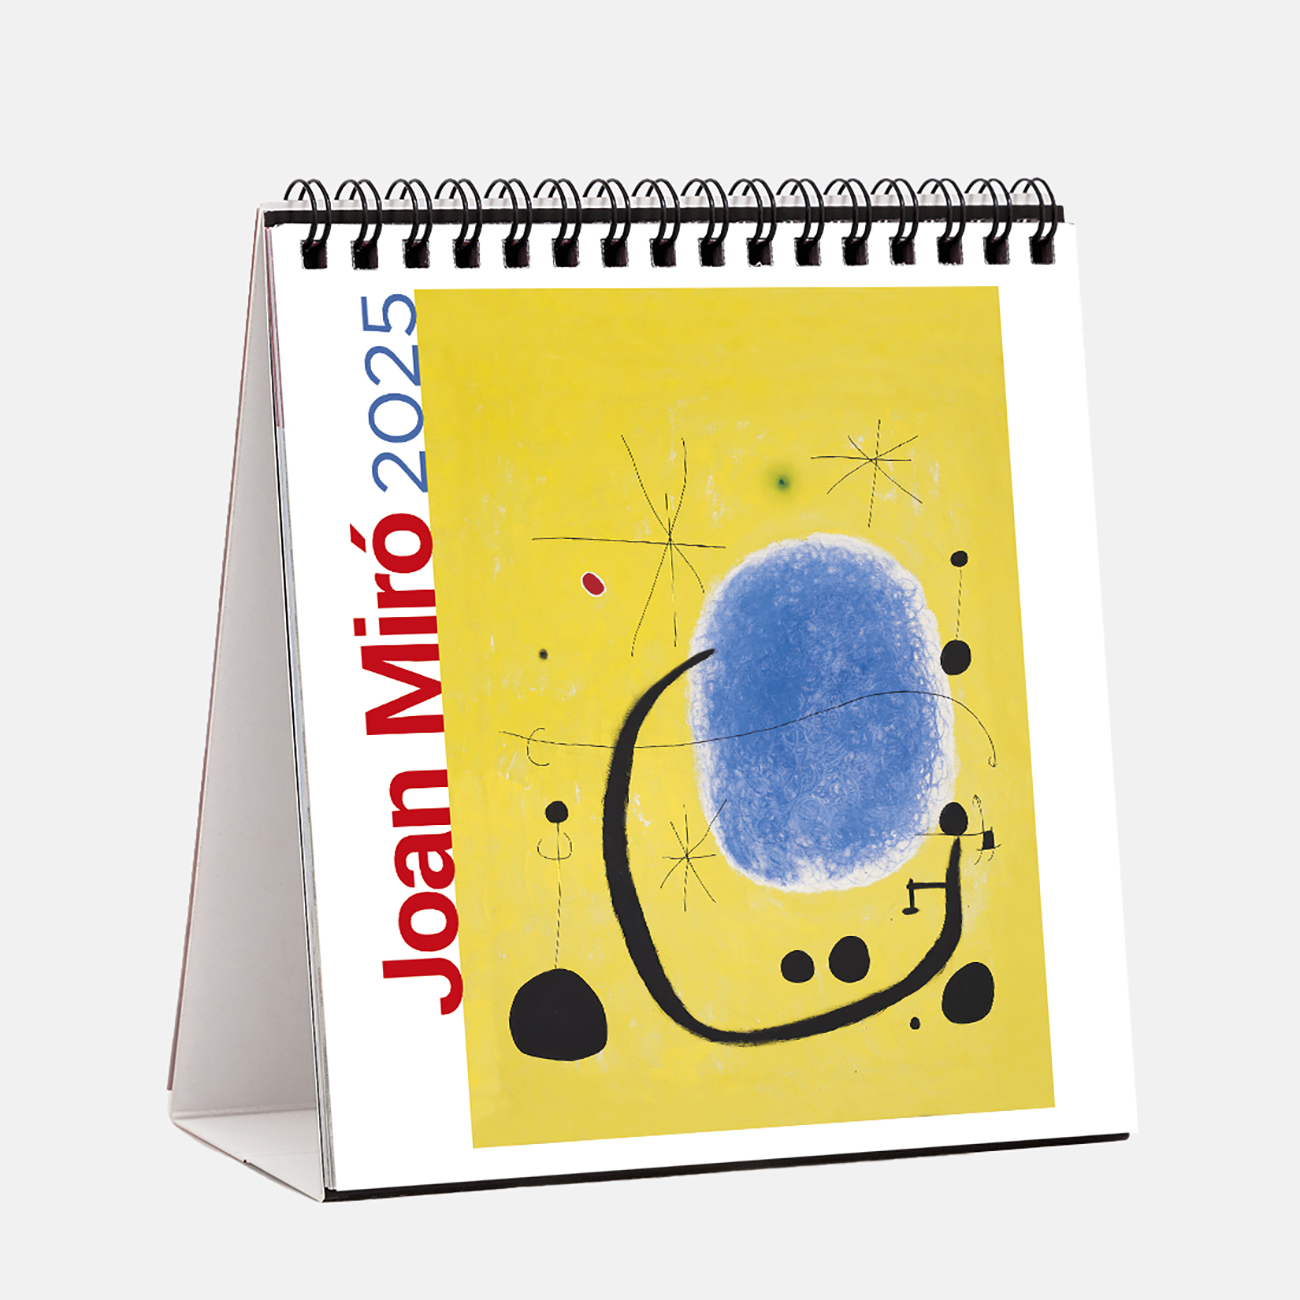 Calendar 2025 Miró - Barcelona s25mi2 calendario sobremesa 2025 joan miro barcelona